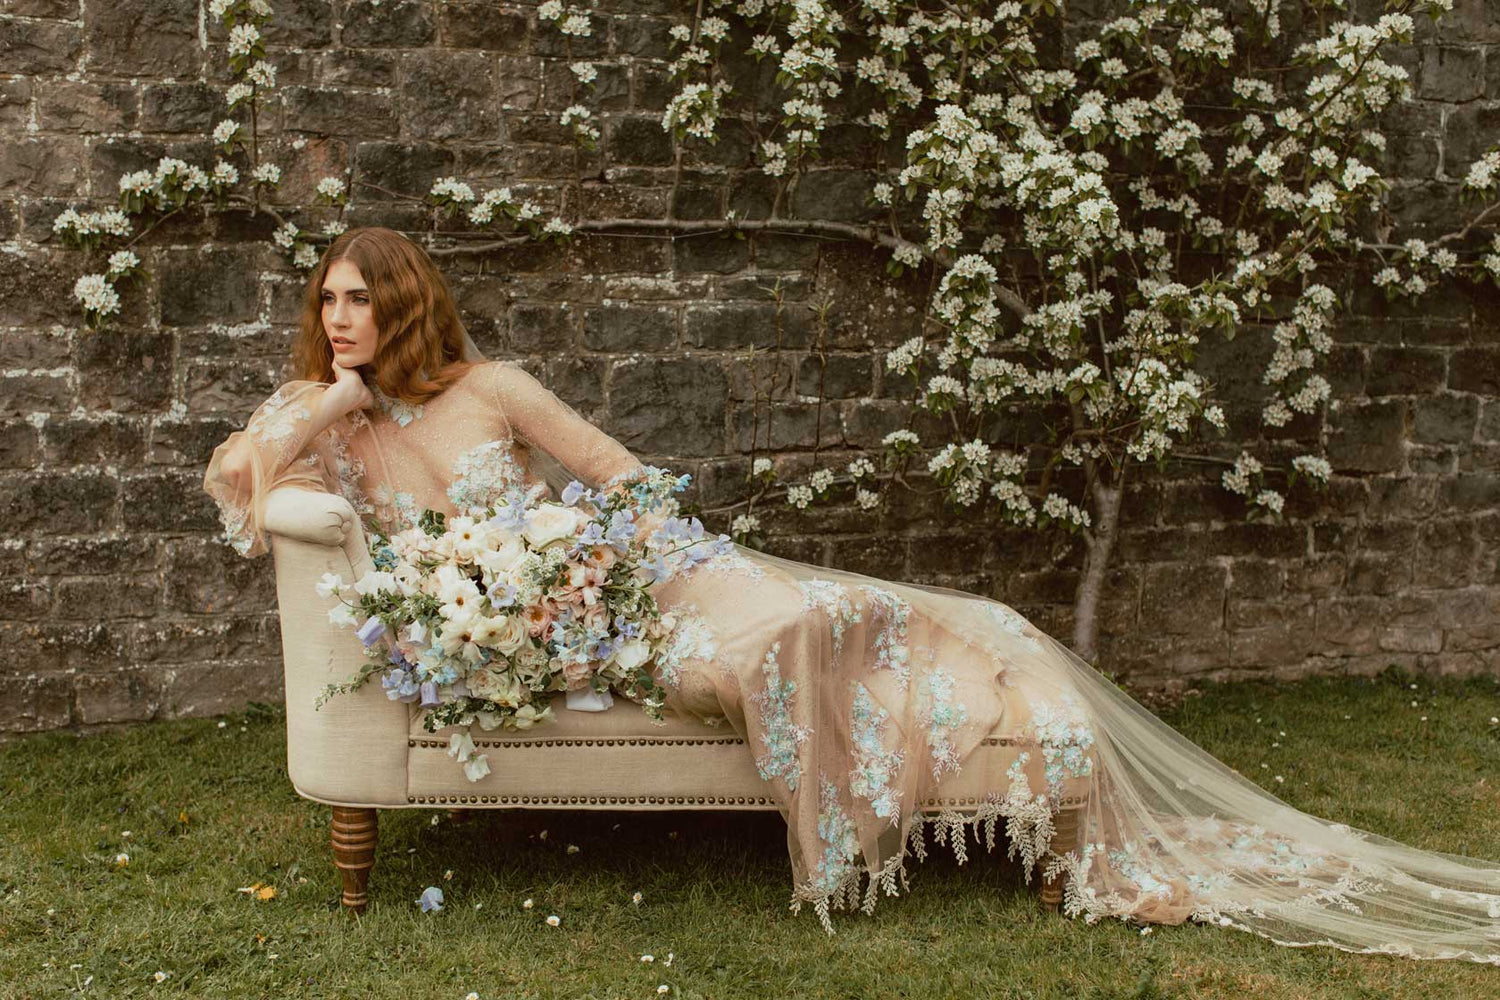 Venus colorful Wedding Dress by Claire Pettibone on model in Garden Wedding